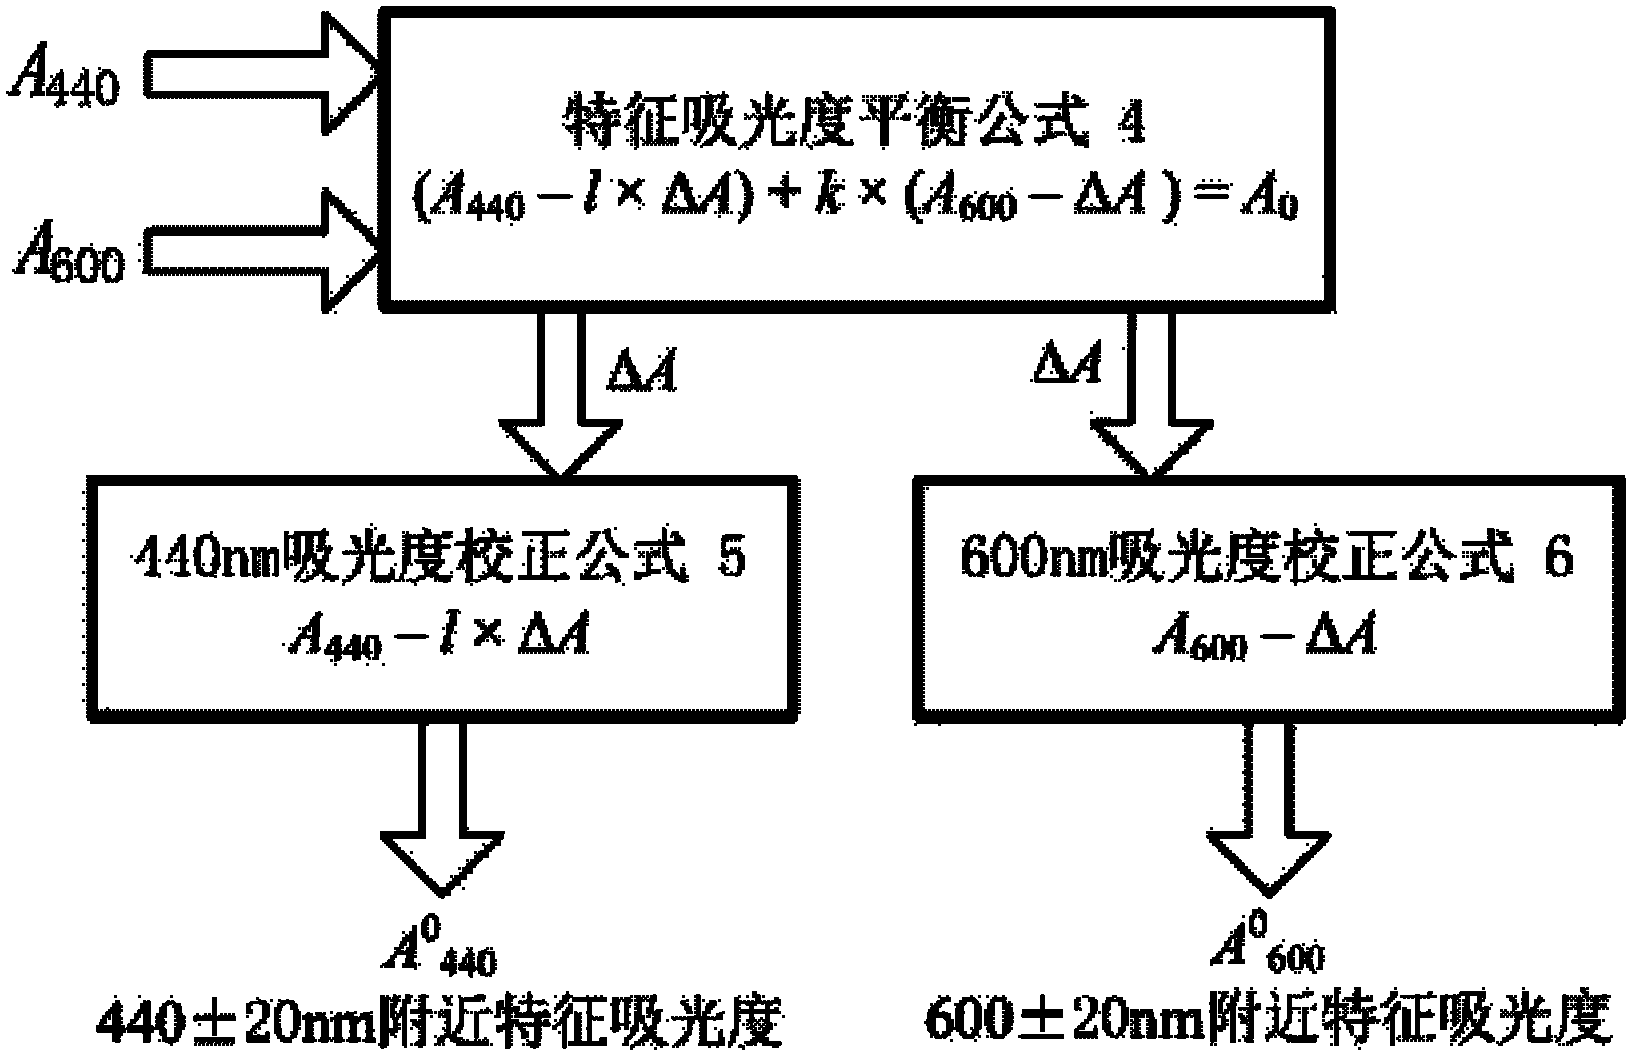 Background absorption correction method for CODcr measurement